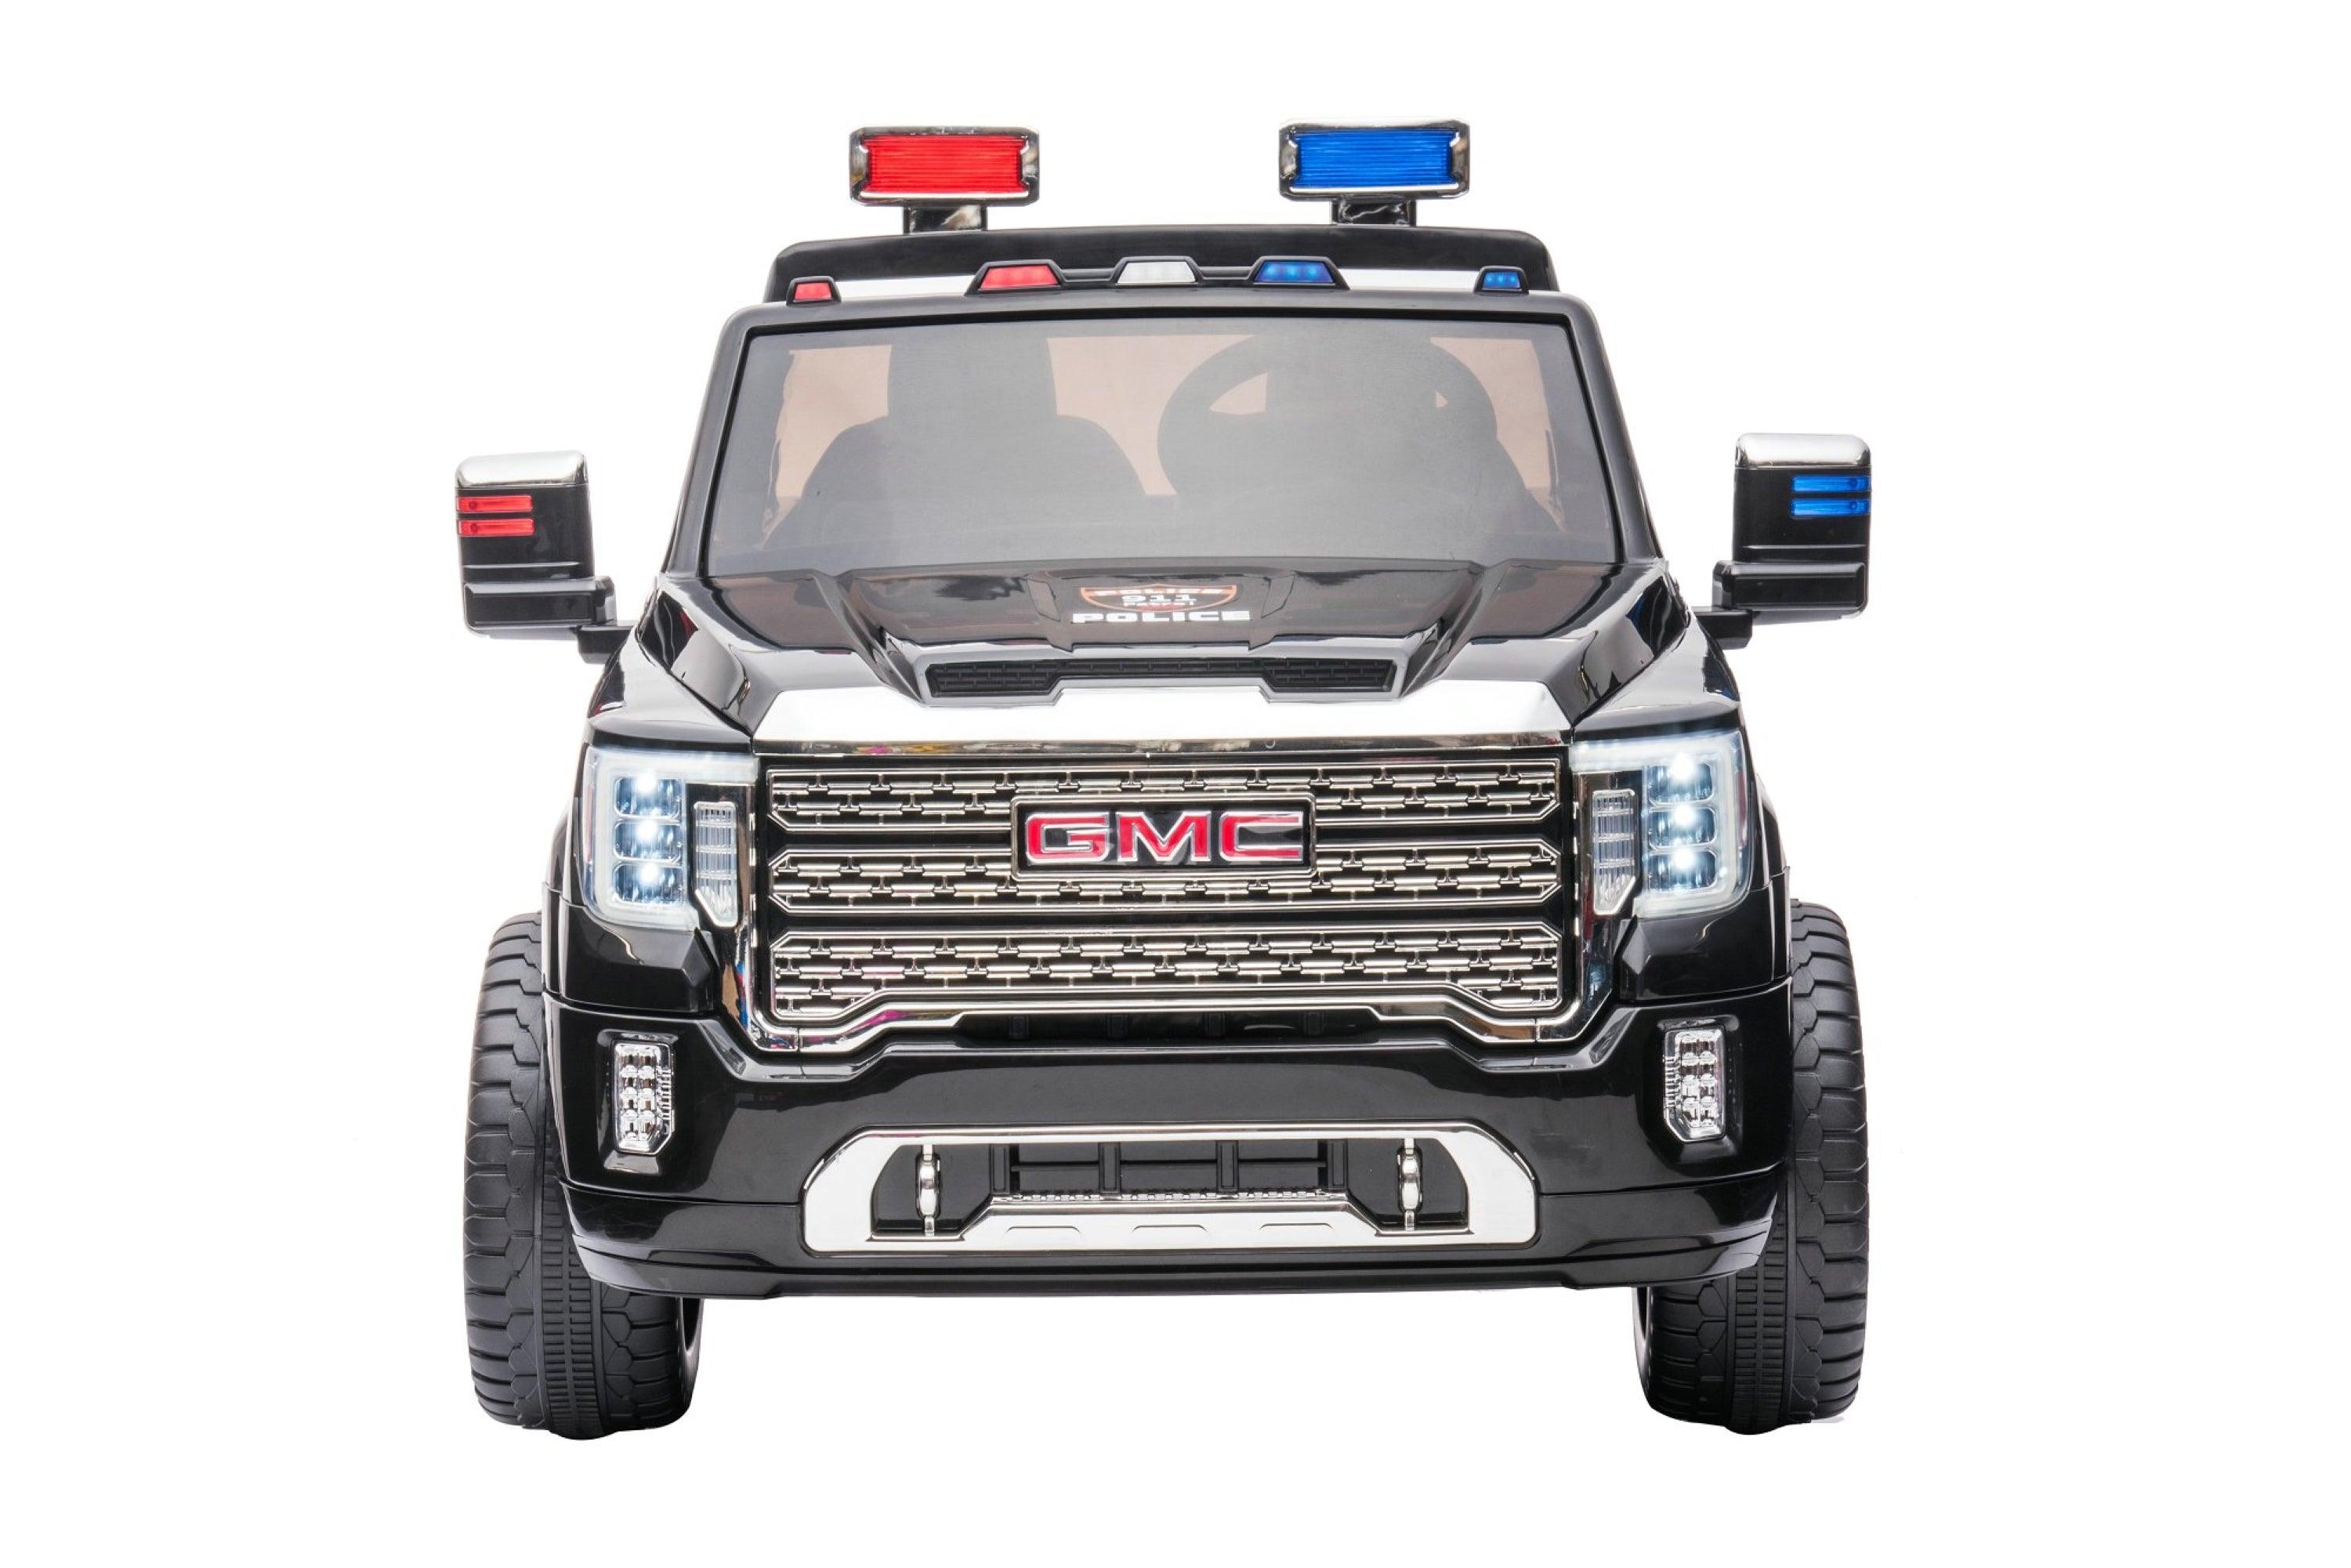 24V GMC Sierra Denali 2 Seater Police Ride-On Truck - DTI Direct USA